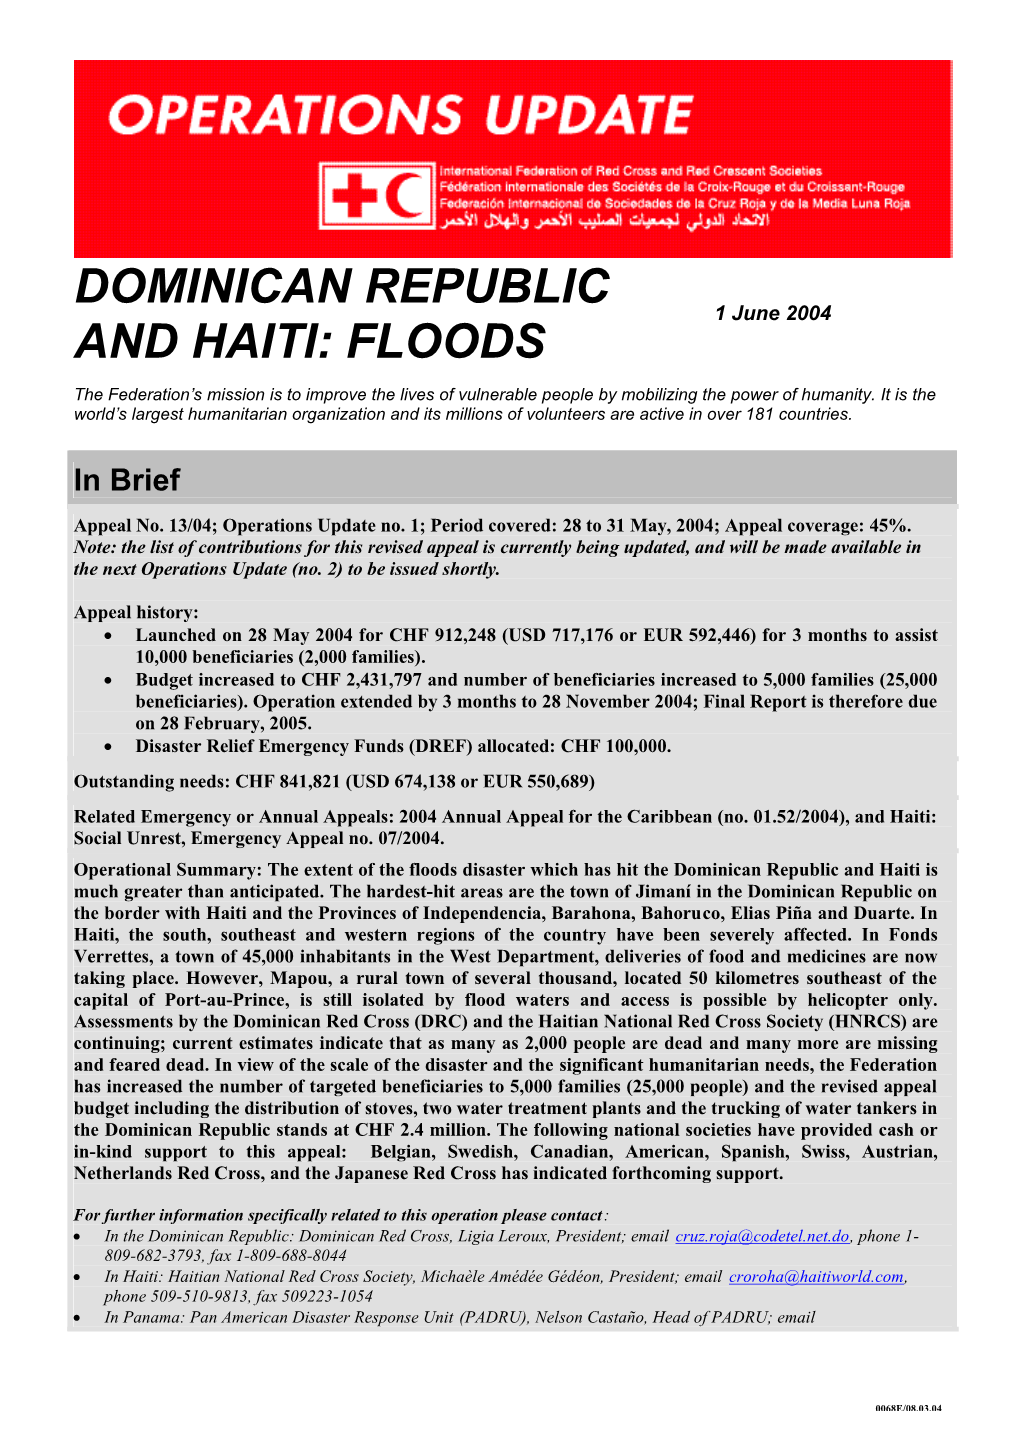 Dominican Republic and Haiti: Floods